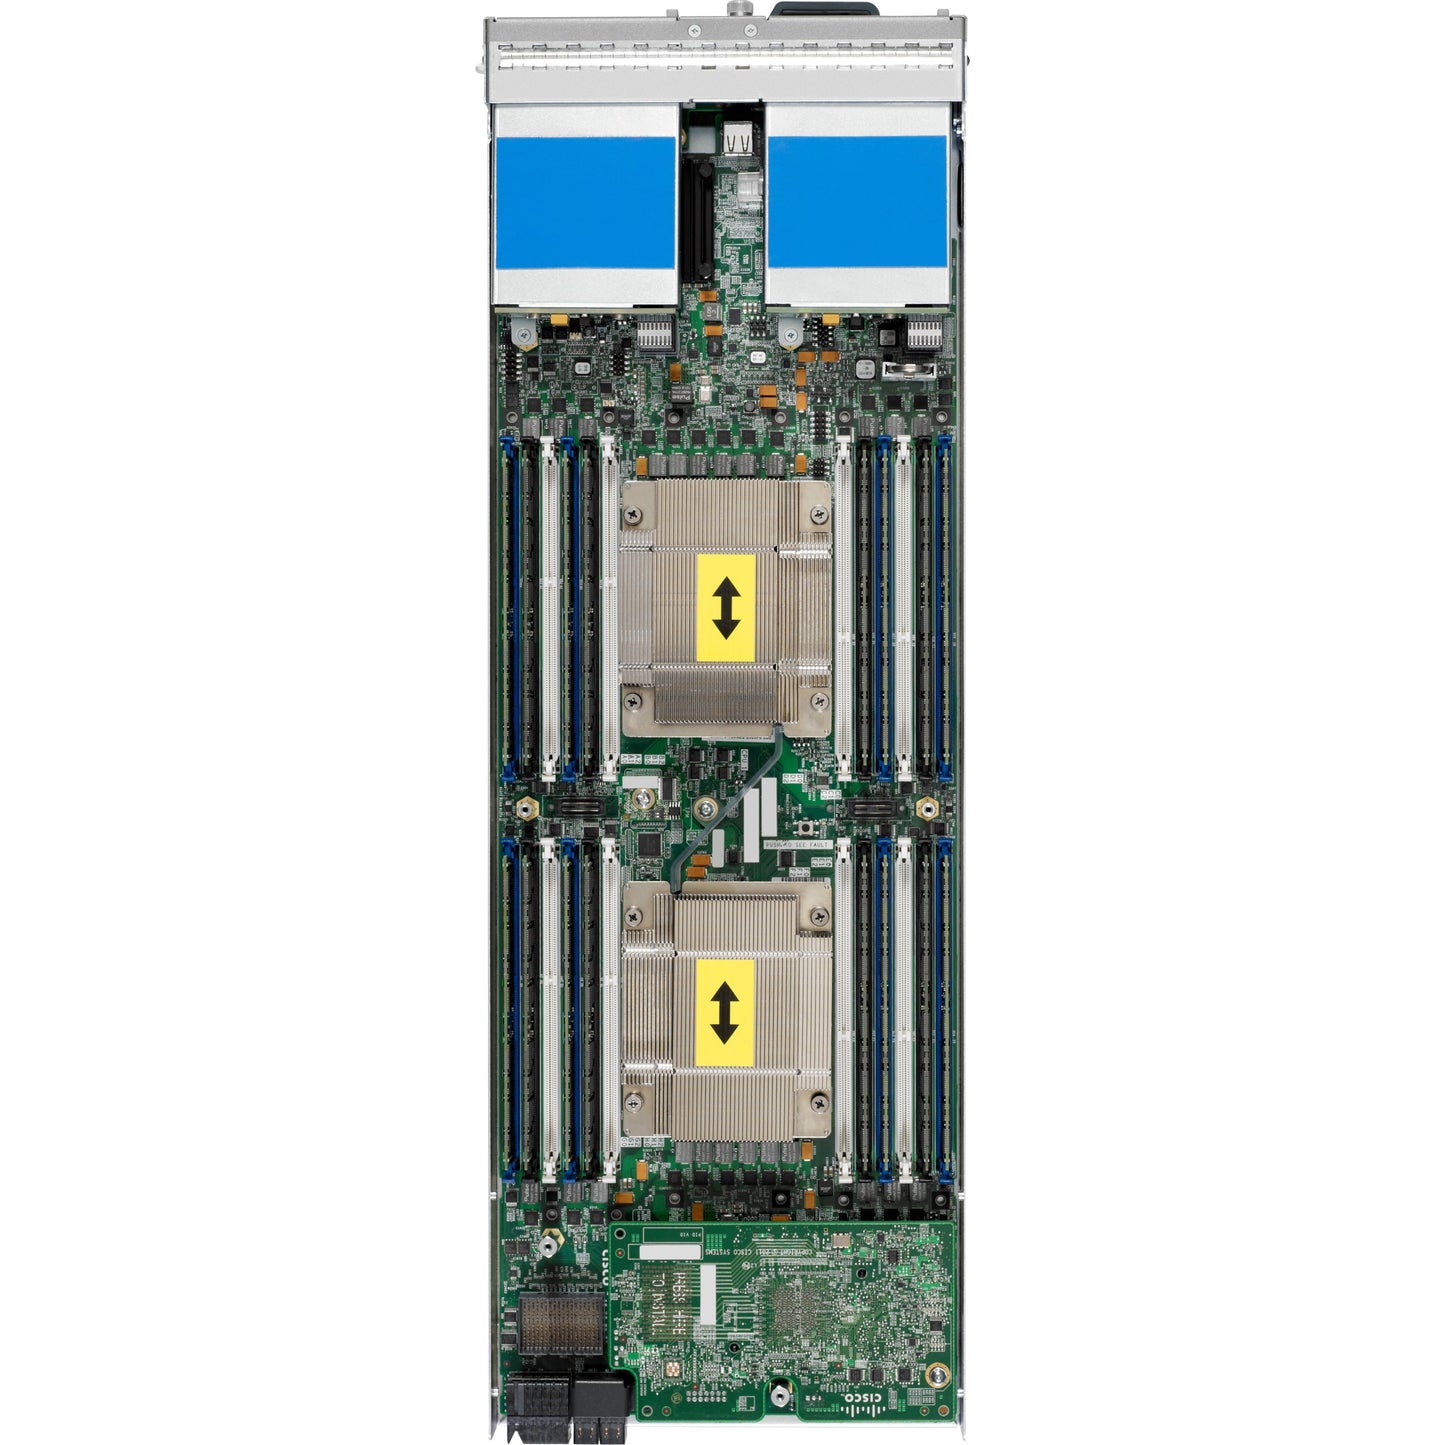 Cisco B200 M3 Blade Server - 2 x Intel Xeon E5-2640 v2 2 GHz - 128 GB RAM - Serial Attached SCSI (SAS) Controller - Refurbished